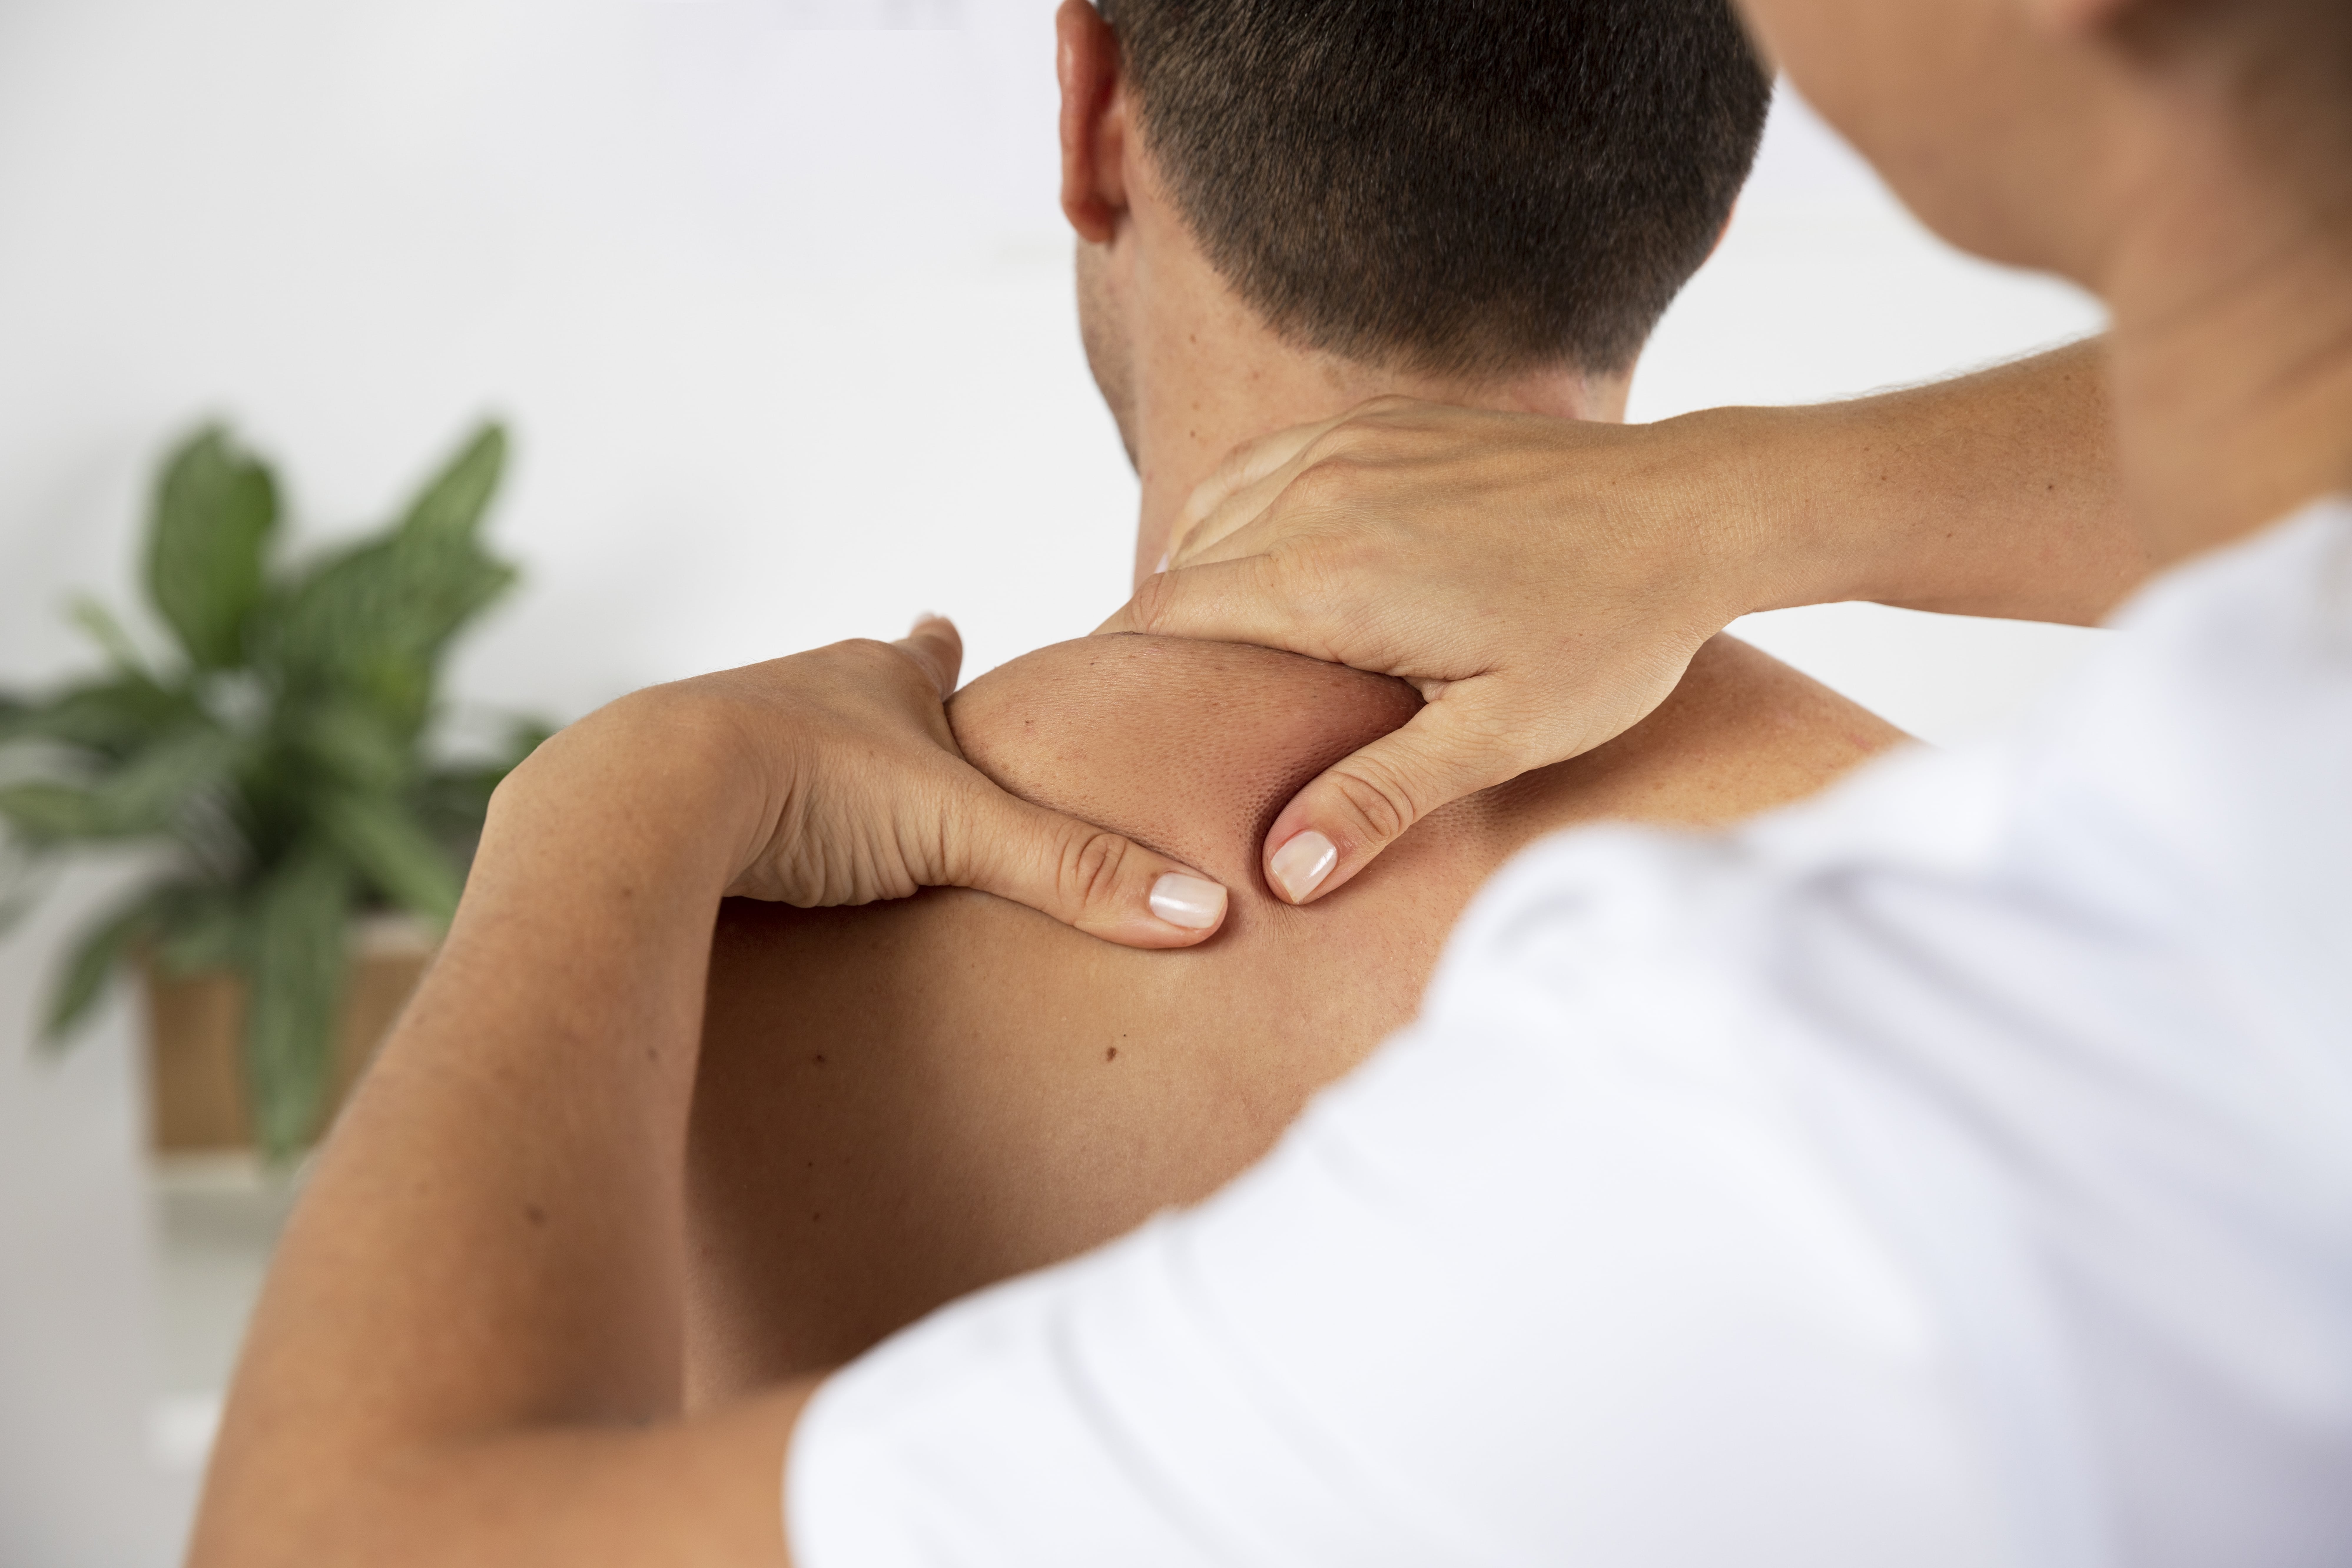 Sports Massage Therapist providing a massage to a client